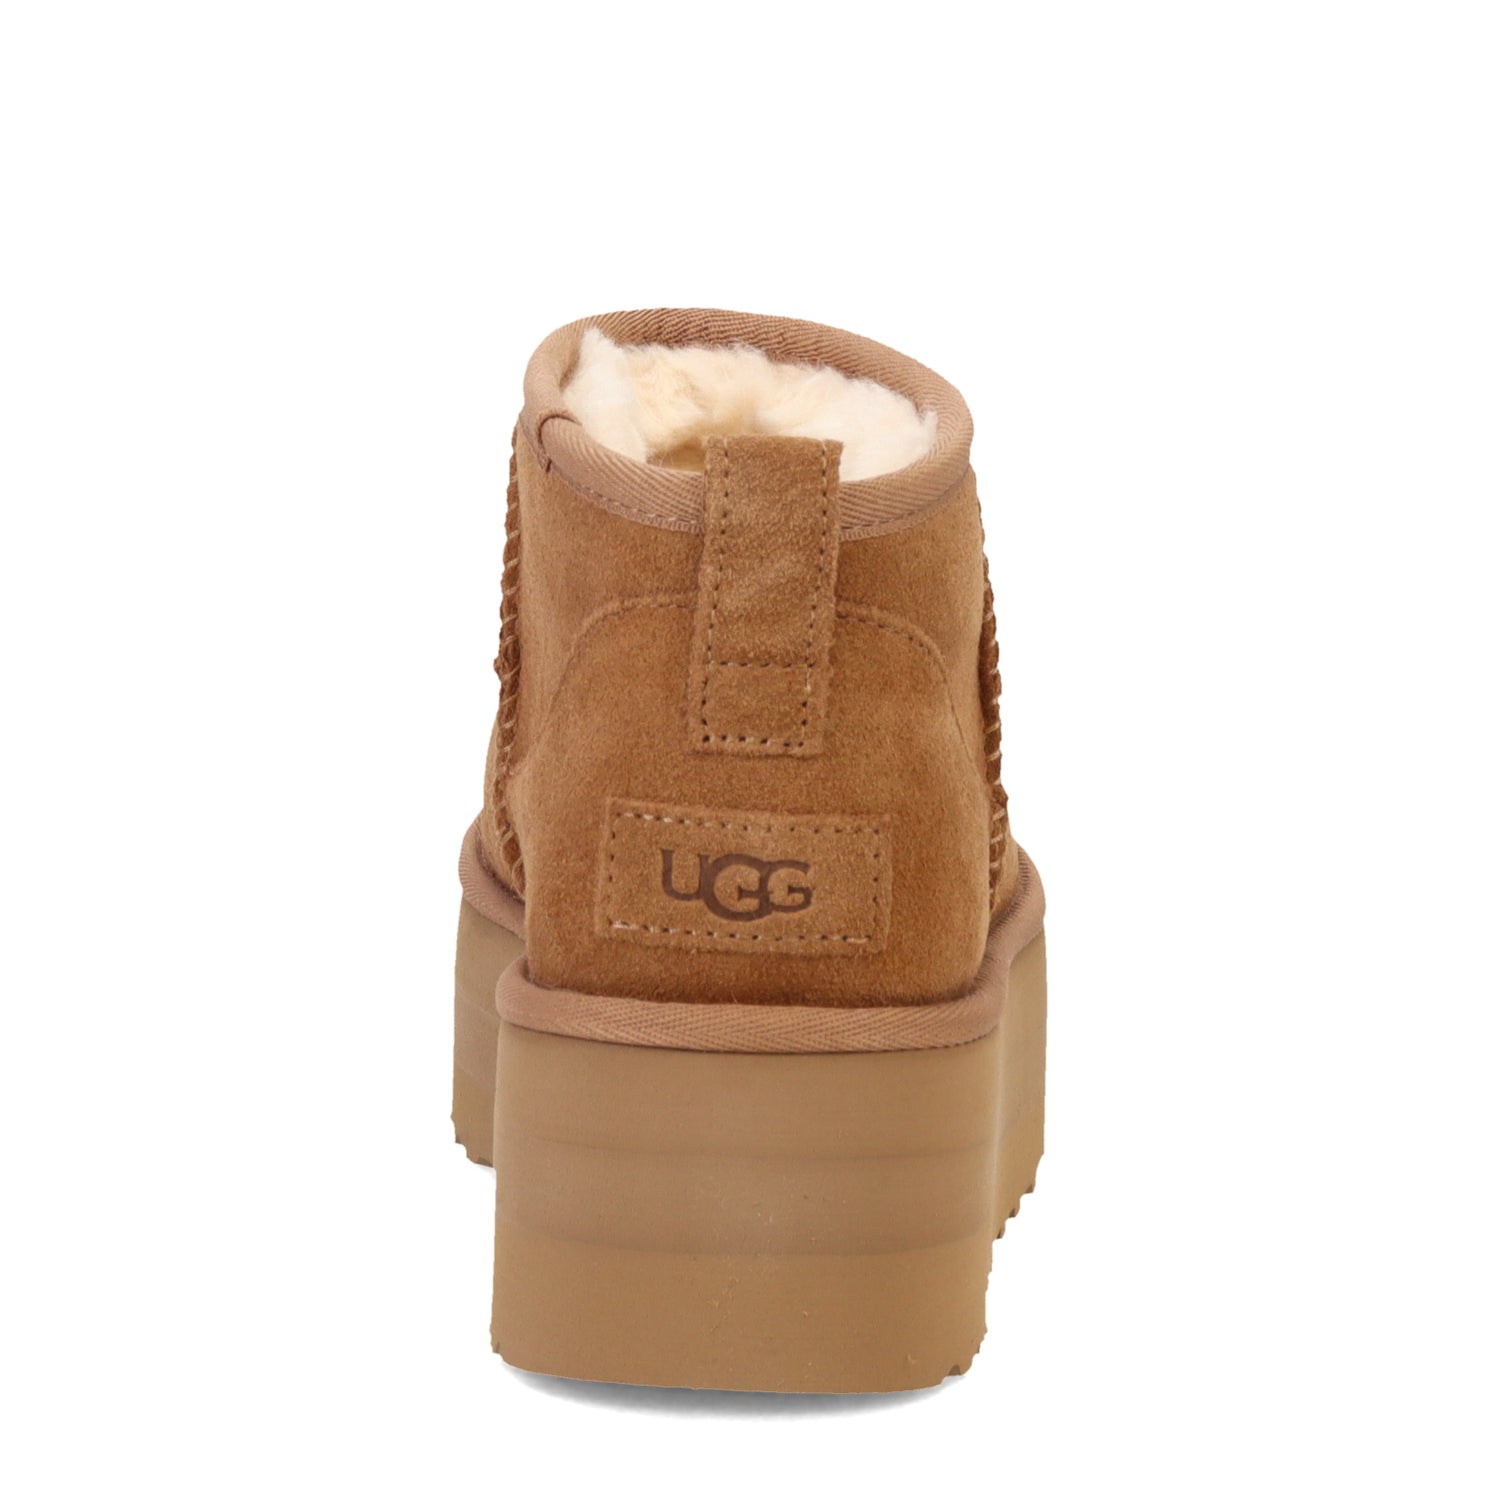 UGG Classic Ultra Mini Platform Boots - Black - Size 6 - Women